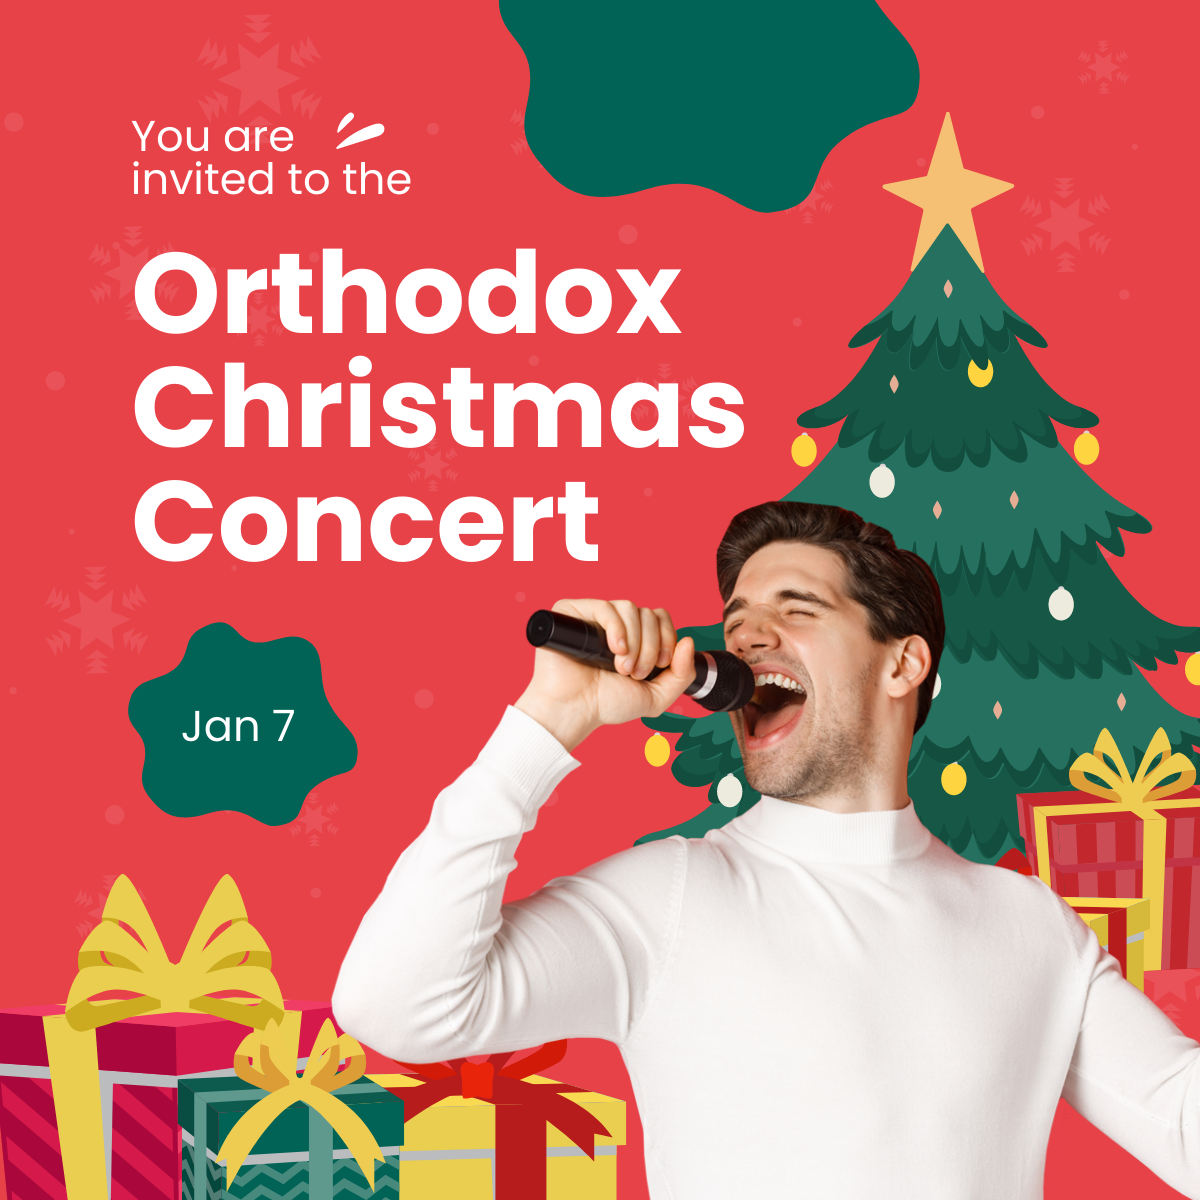 Orthodox Christmas Concert Linkedin Post Template